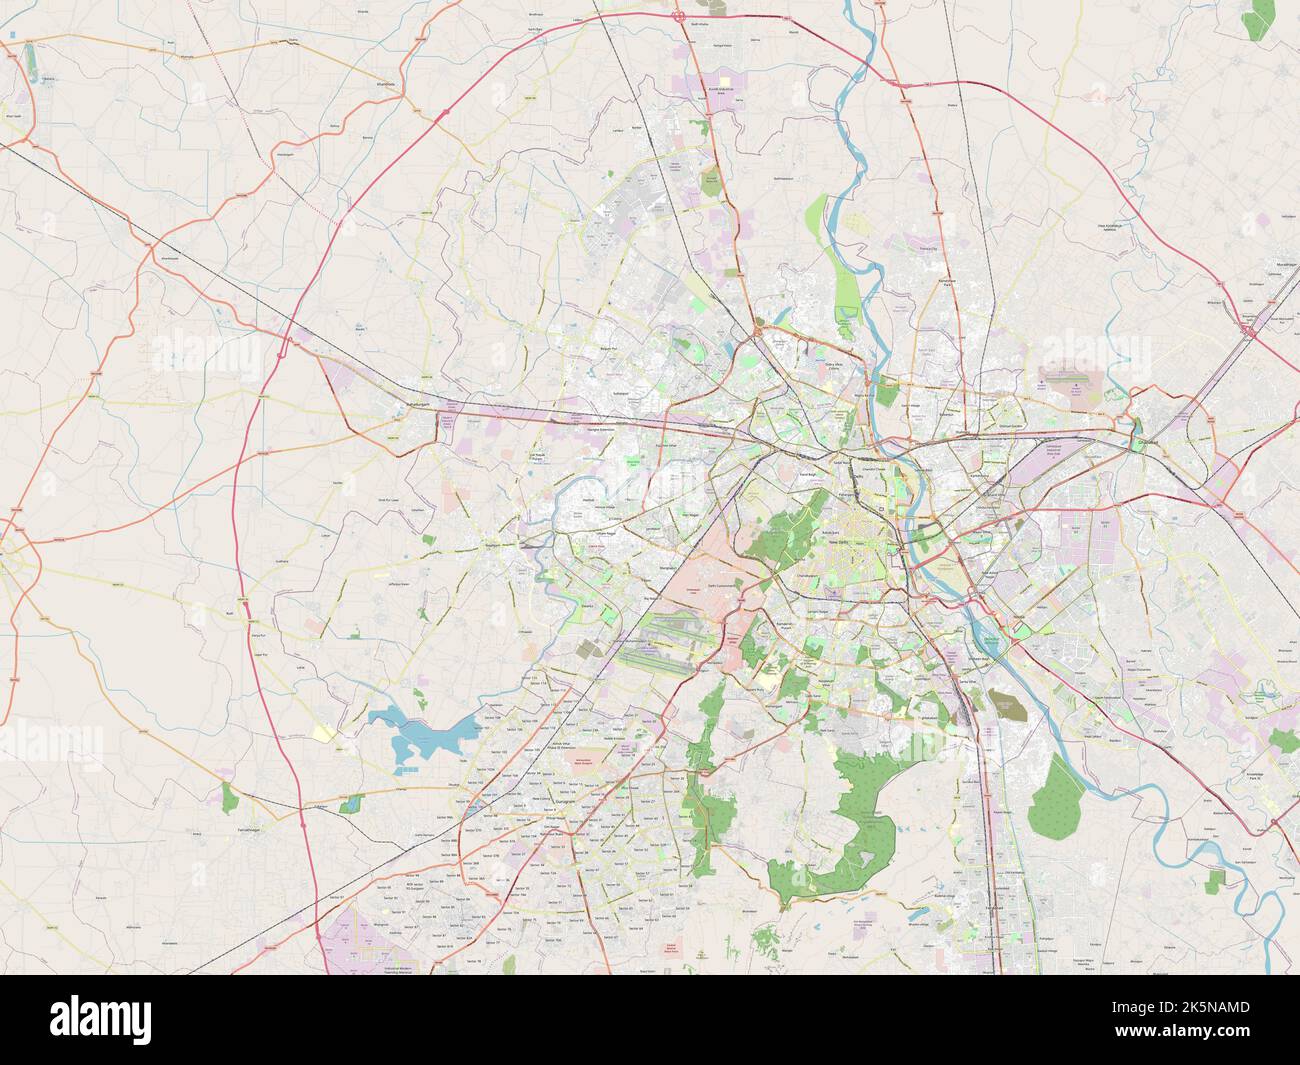 National Capital Territory of Delhi, union territory of India. Open Street Map Stock Photo